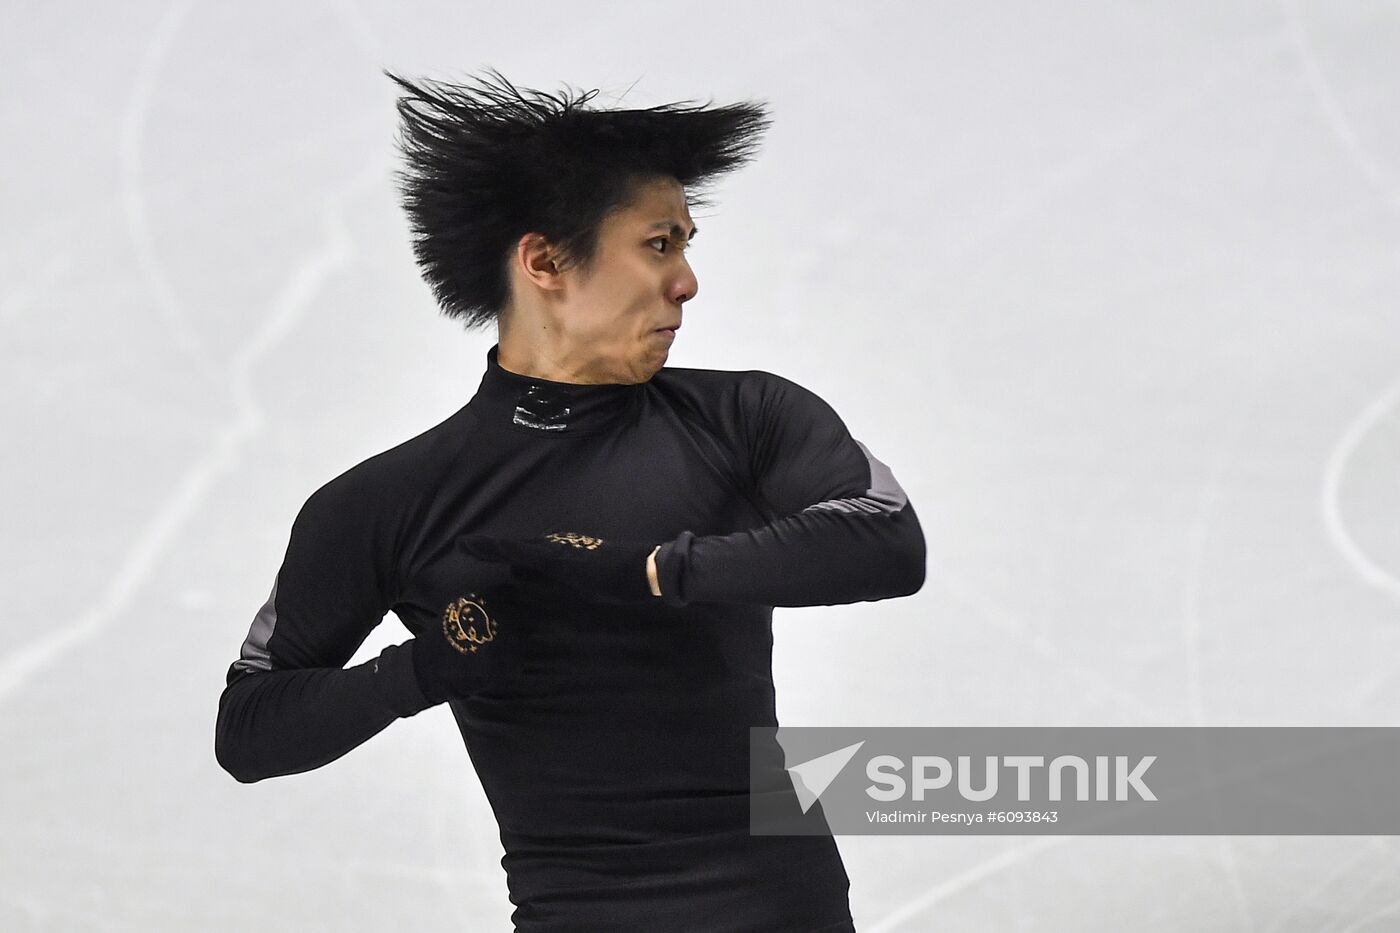 Italy Figure Skating Grand Prix Final Training